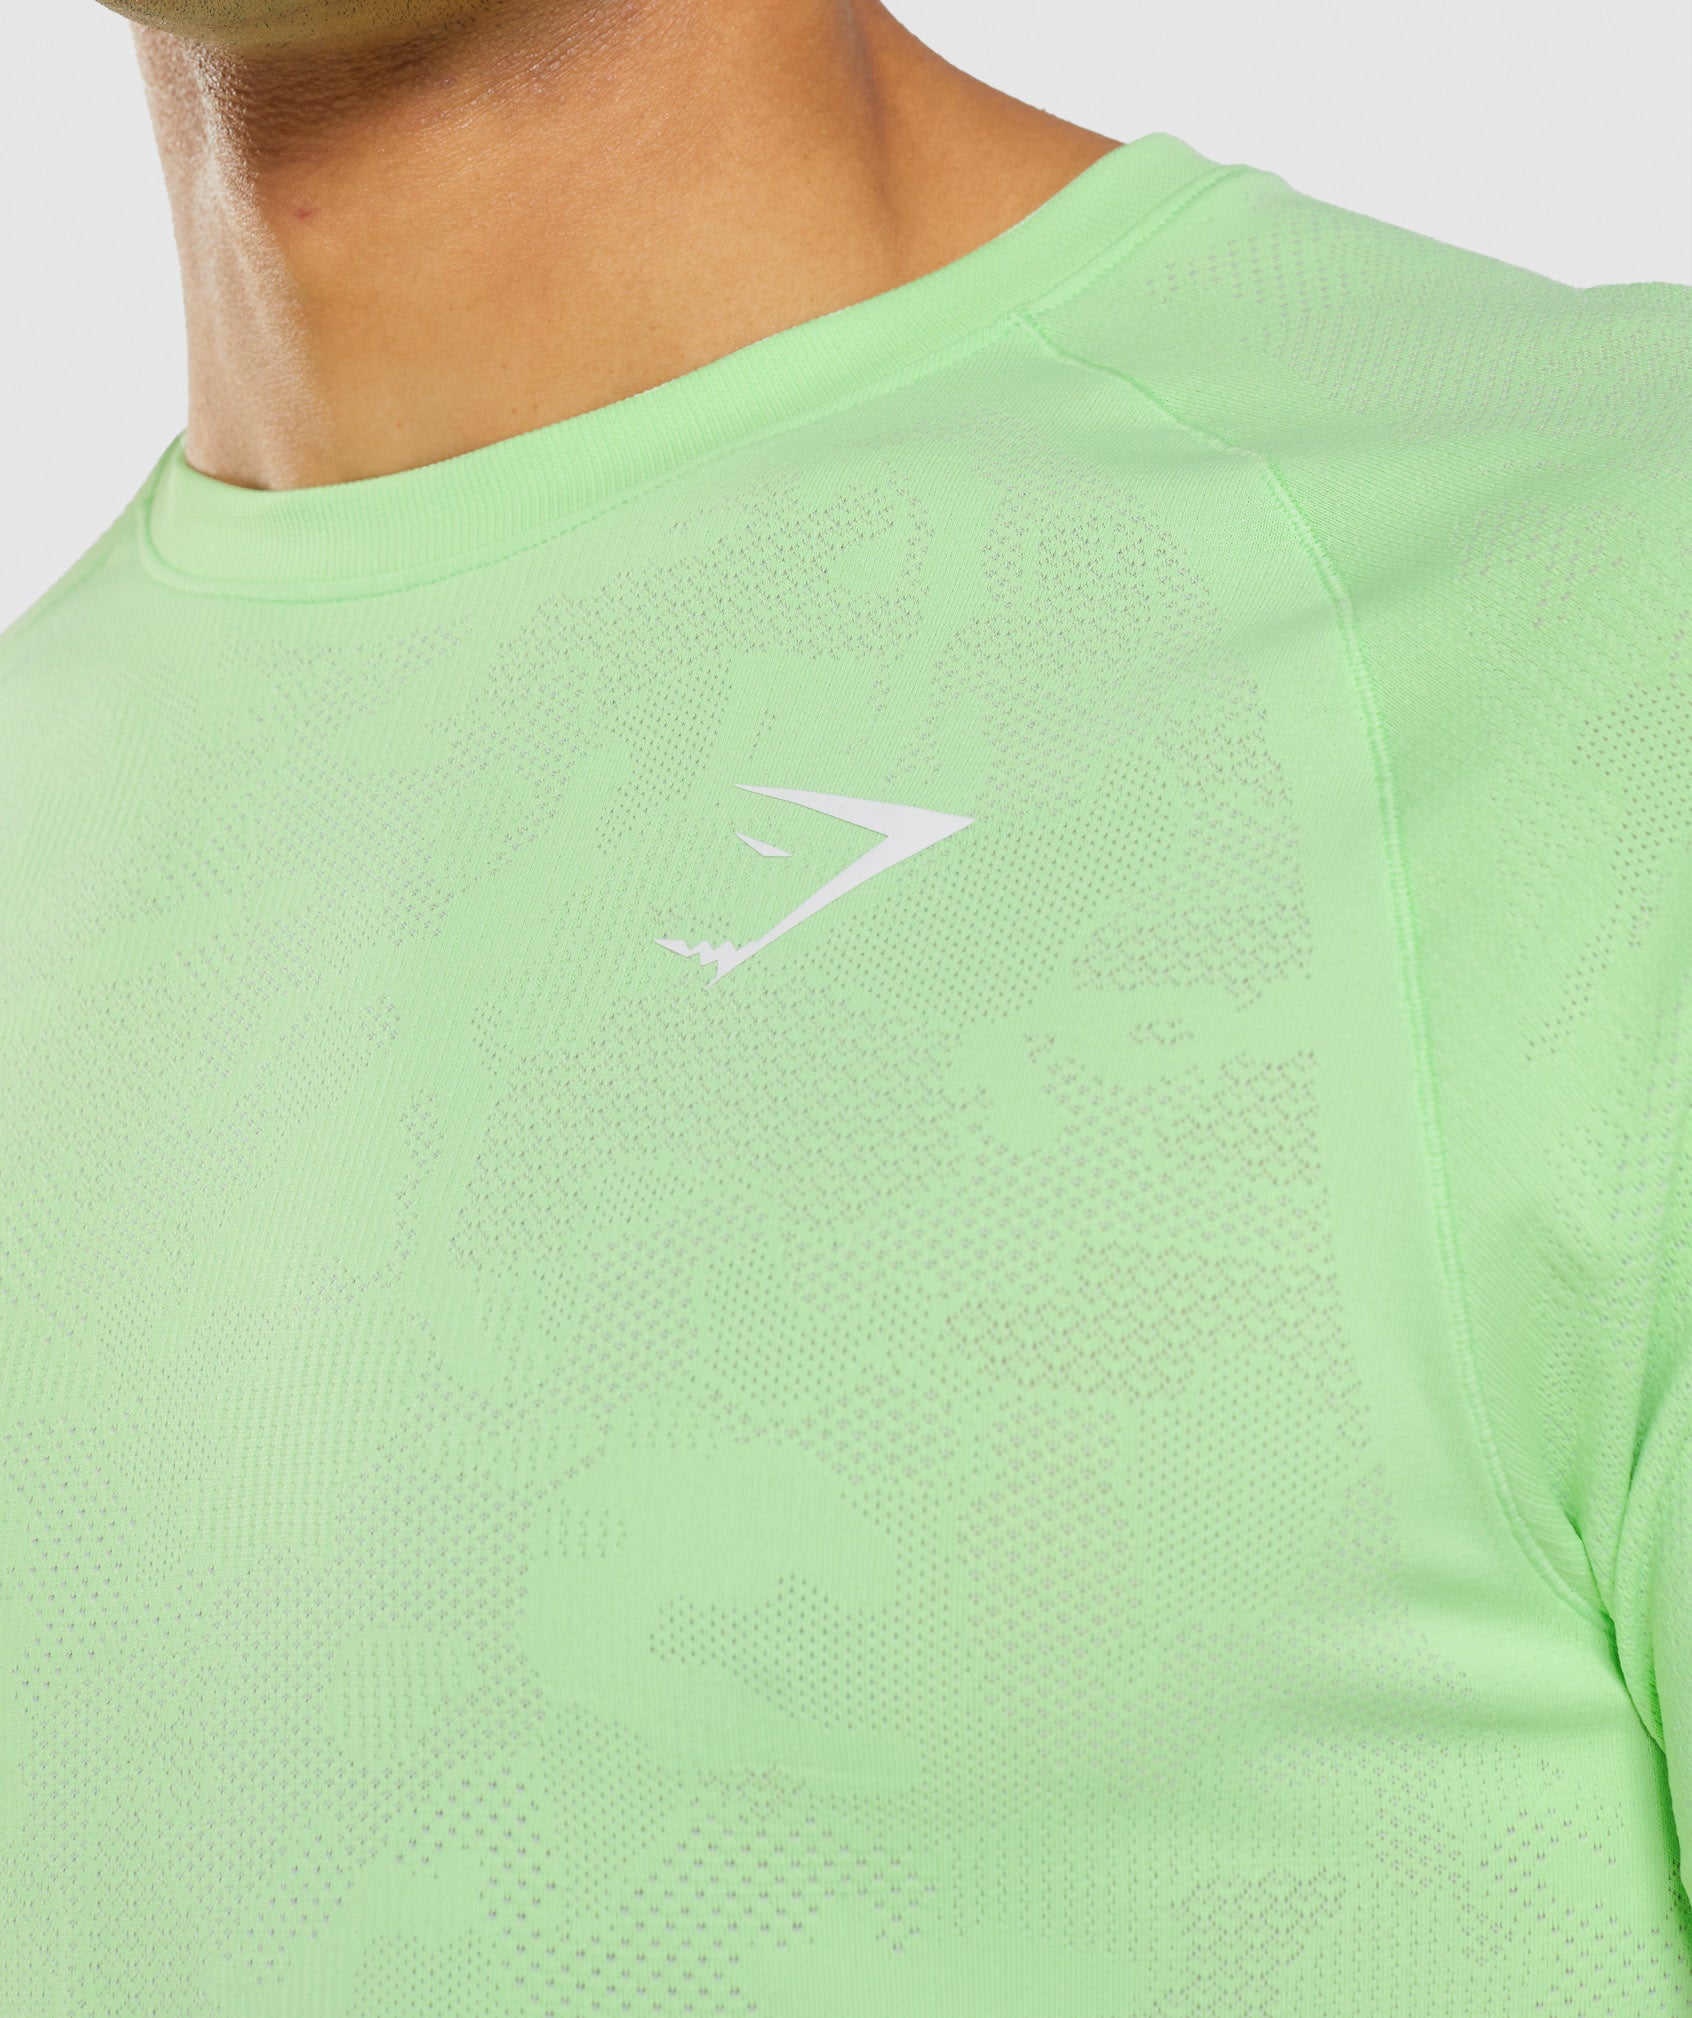 Gymshark Geo Seamless T-Shirt - Bali Green/White